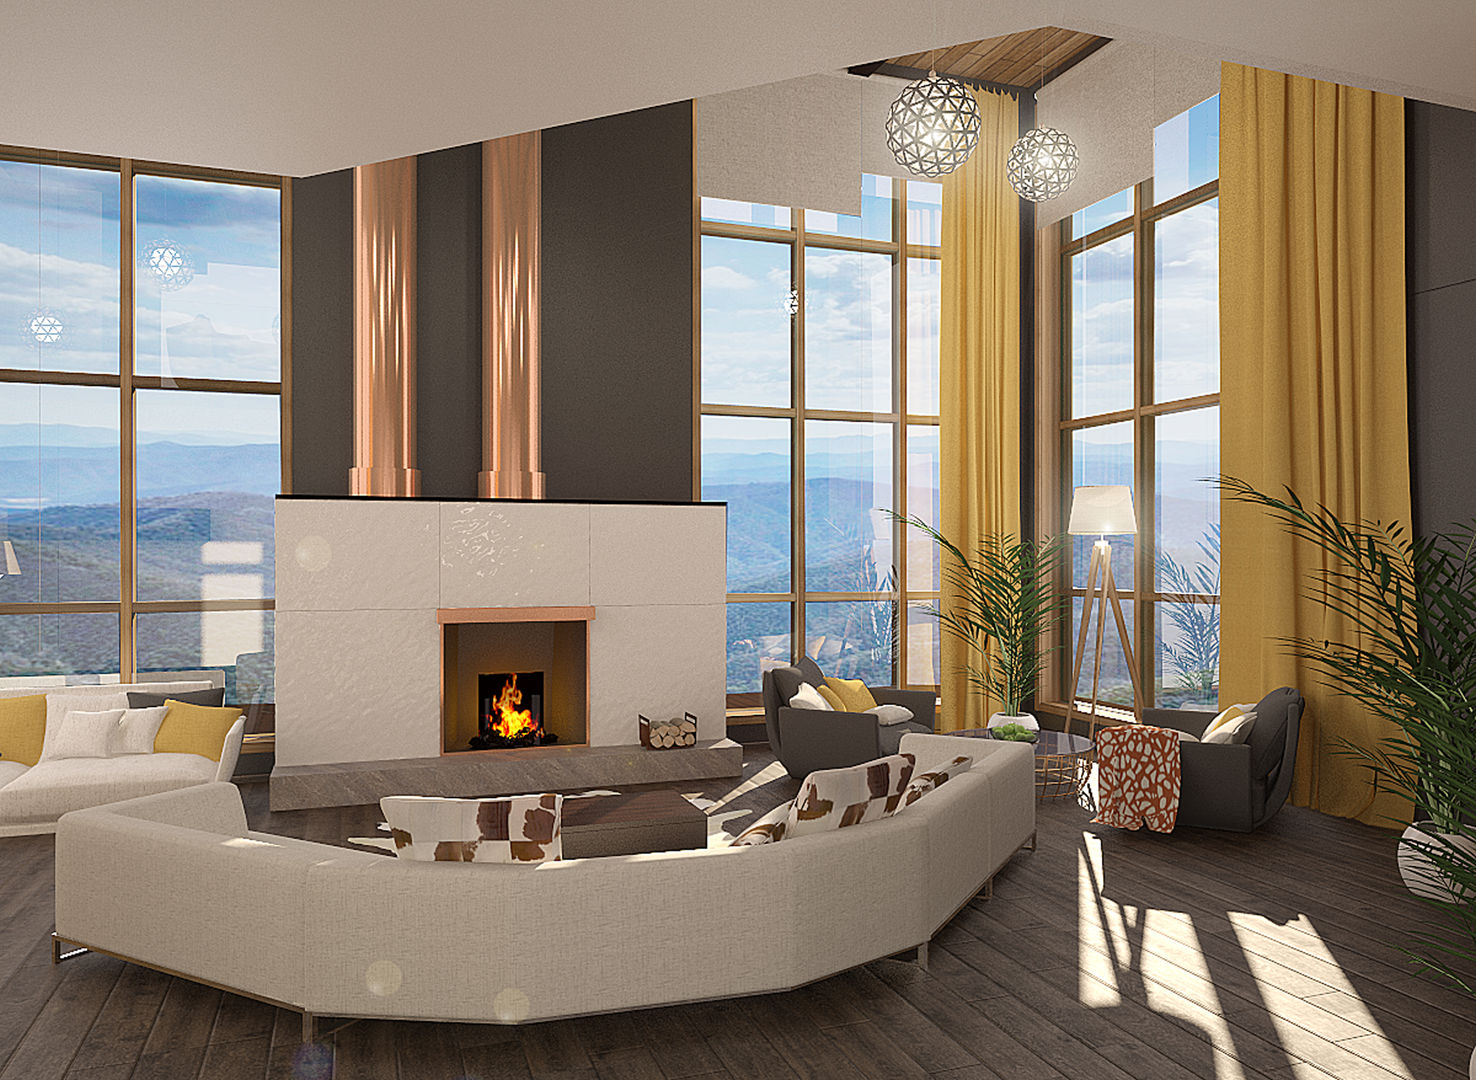 Дом, Chloe Design & Decor/Anastasia Baskakova Chloe Design & Decor/Anastasia Baskakova Modern living room